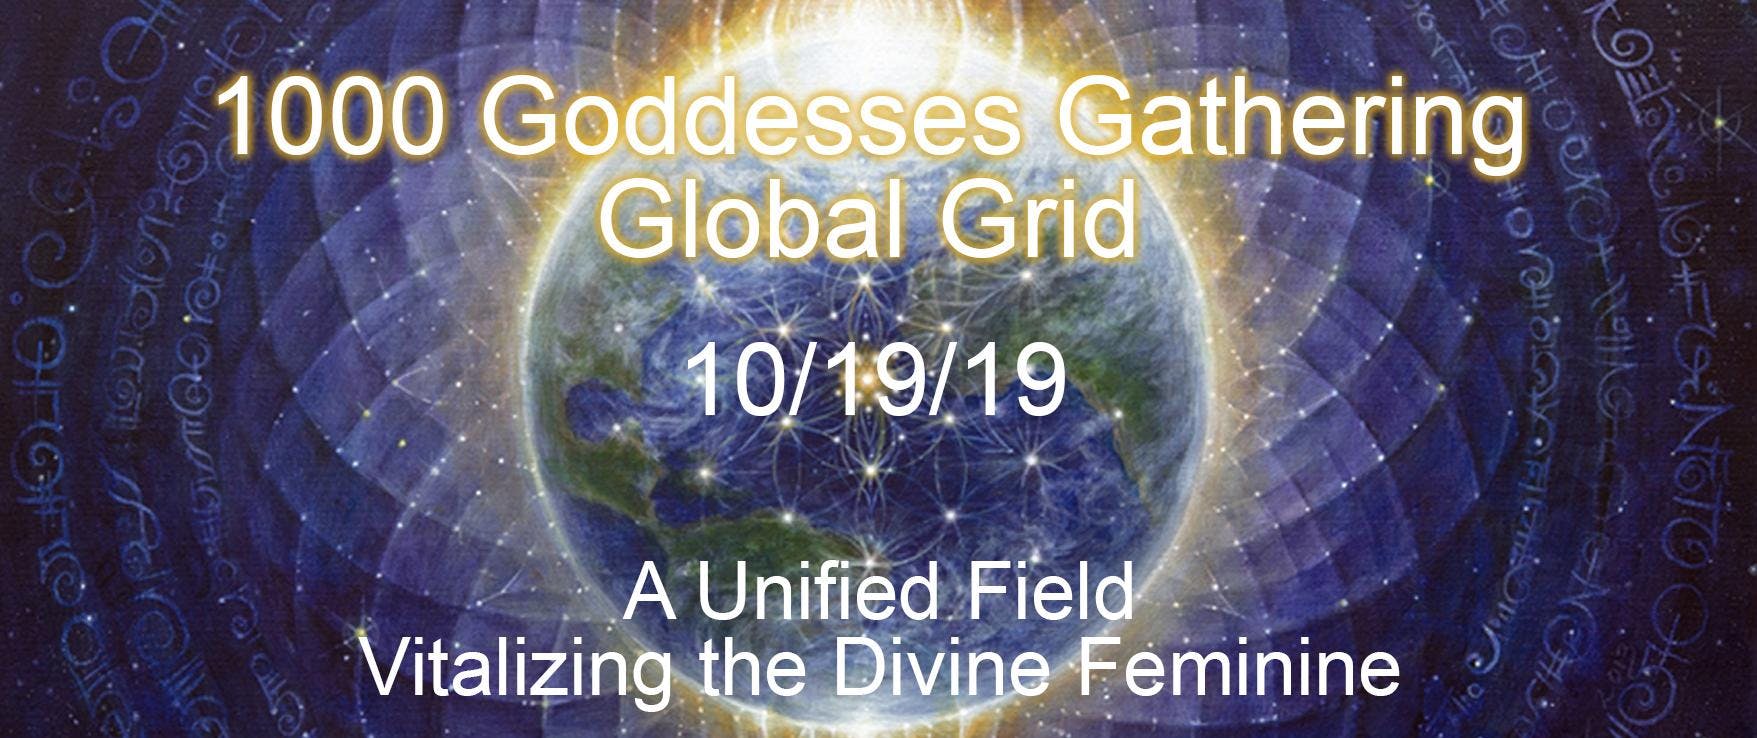 1000 Goddesses Gathering Global Grid